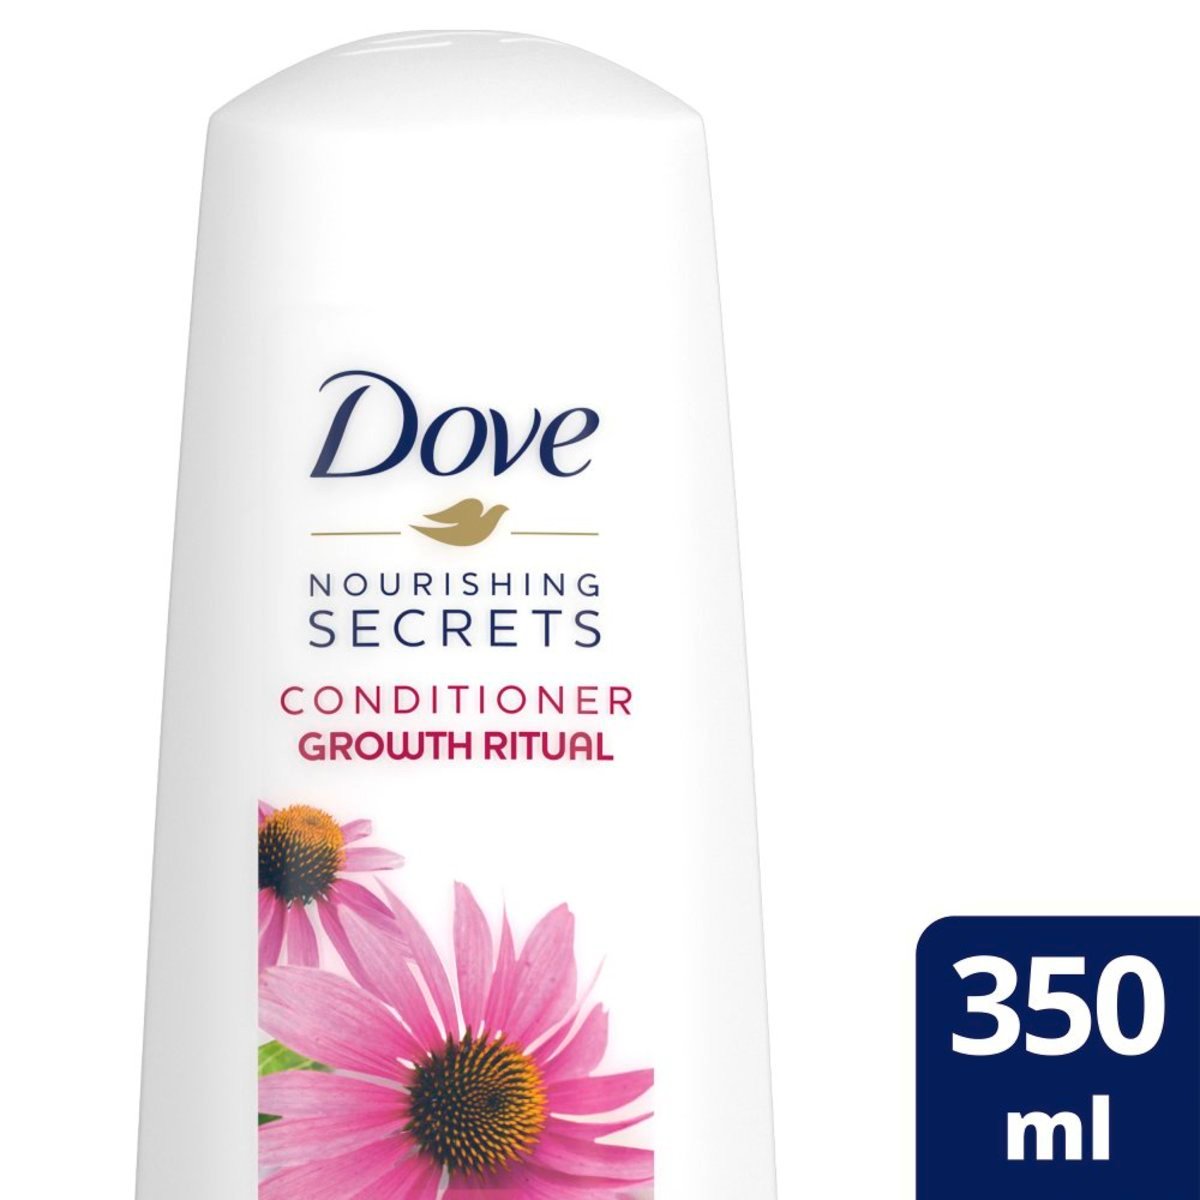 Dove Nourishing Secrets Conditioner Growth Ritual- Echinacea and White Tea, 350 ml